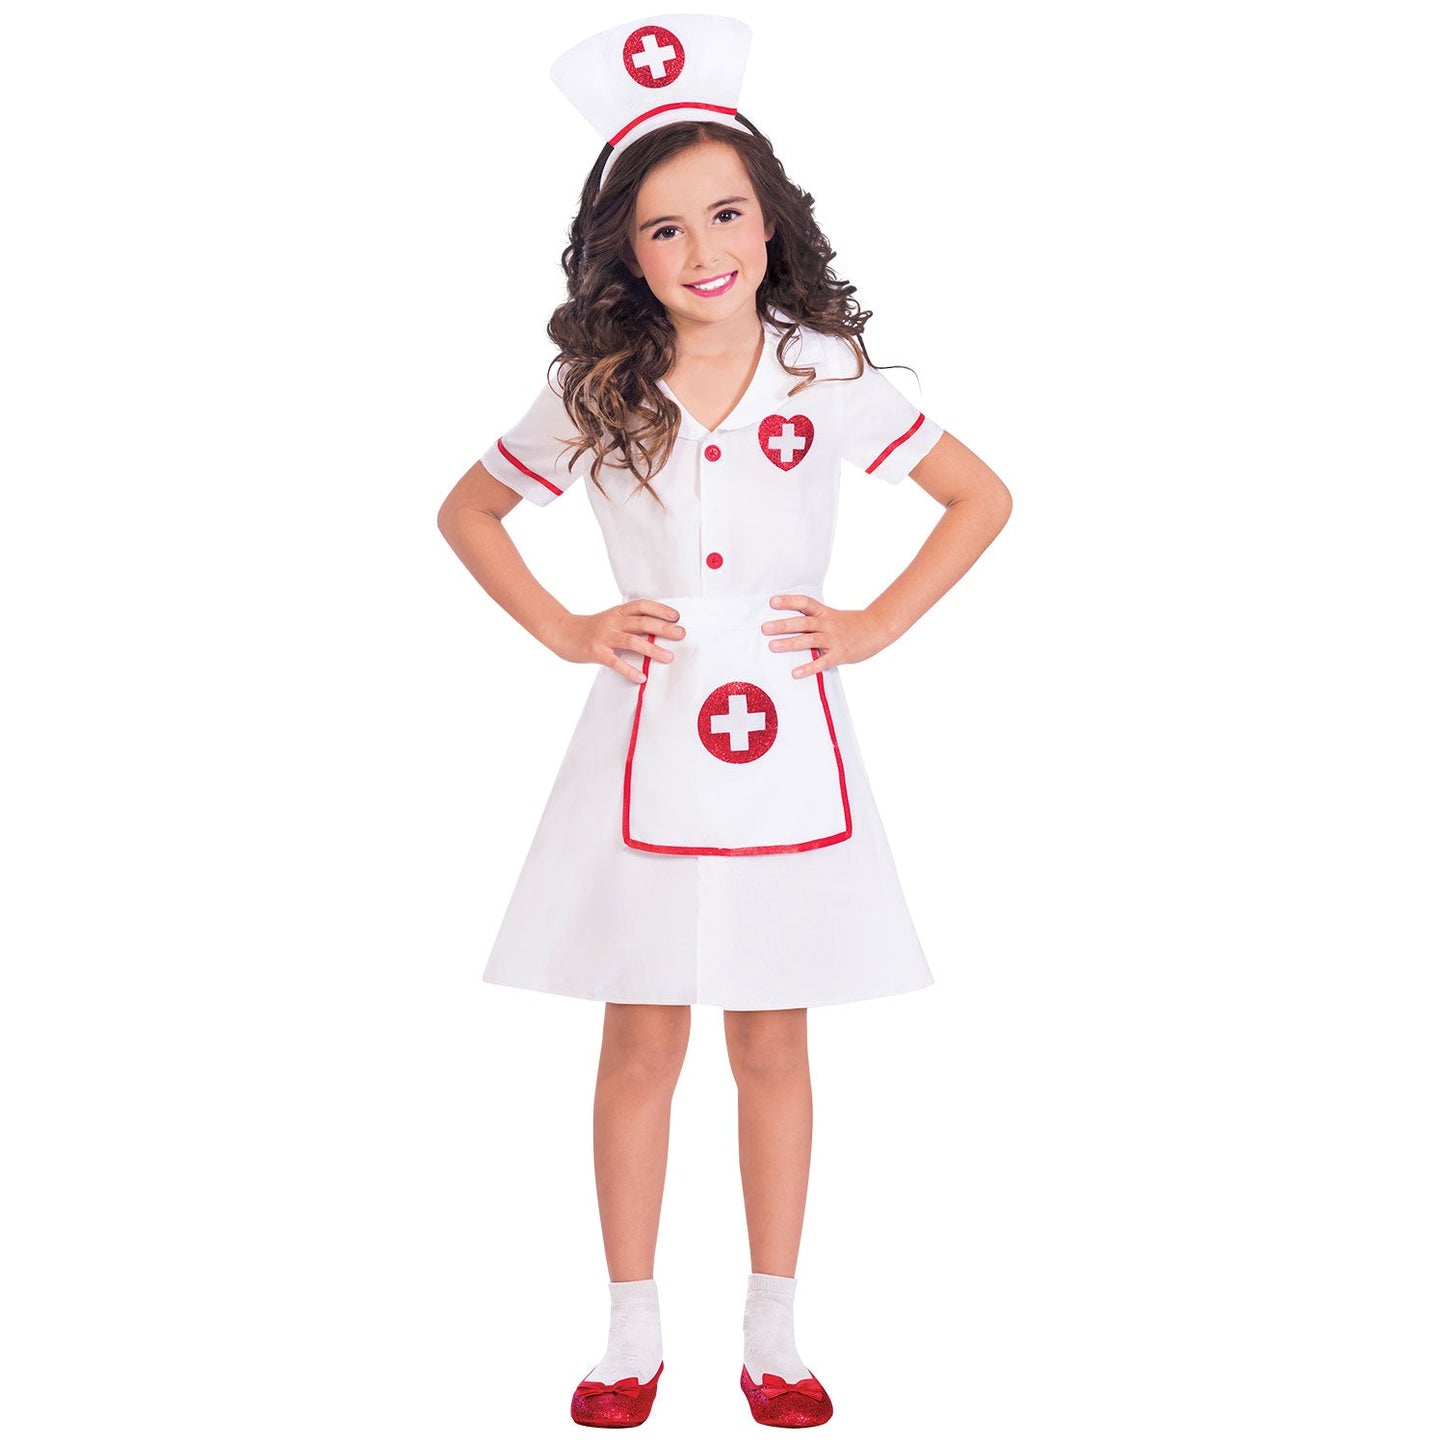 Girls Darling Nurse Costume includes dress| headband and apron